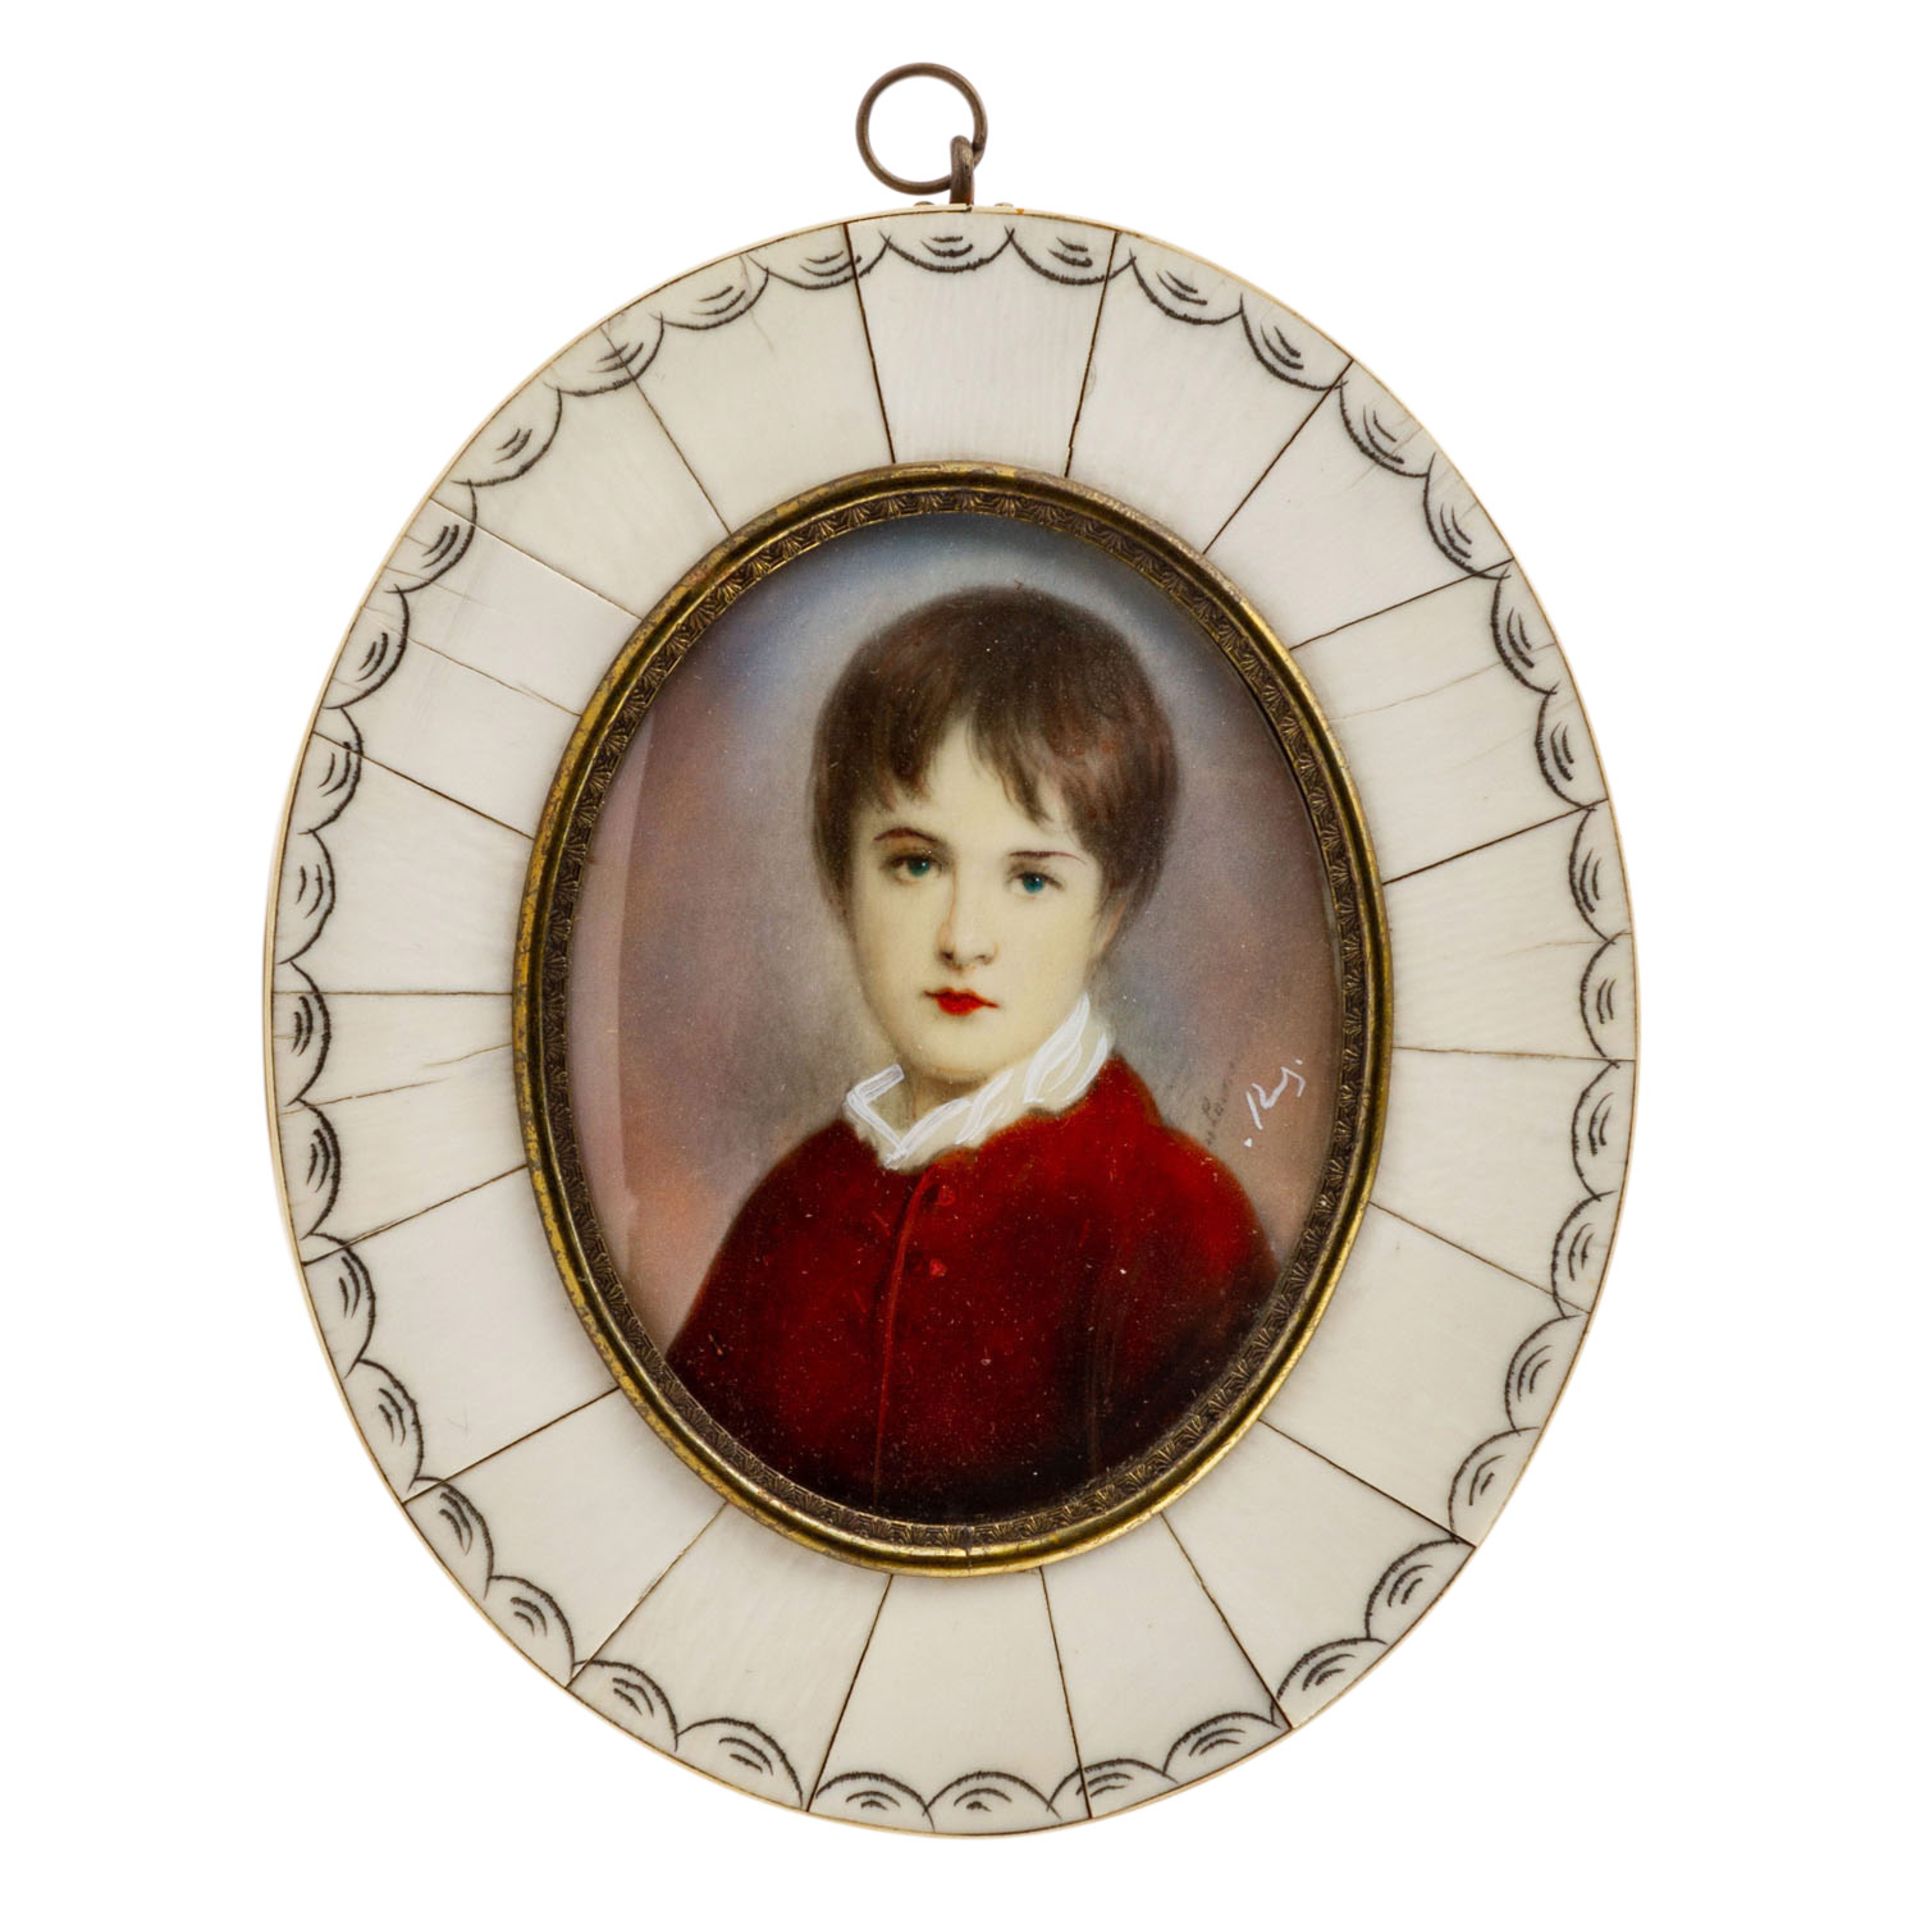 Porträt-Miniatur 'Knabe im roten Anzug', 1900-1945.Im Oval, Elfenbein, ca. 8,5x6,5cm. Rahmung